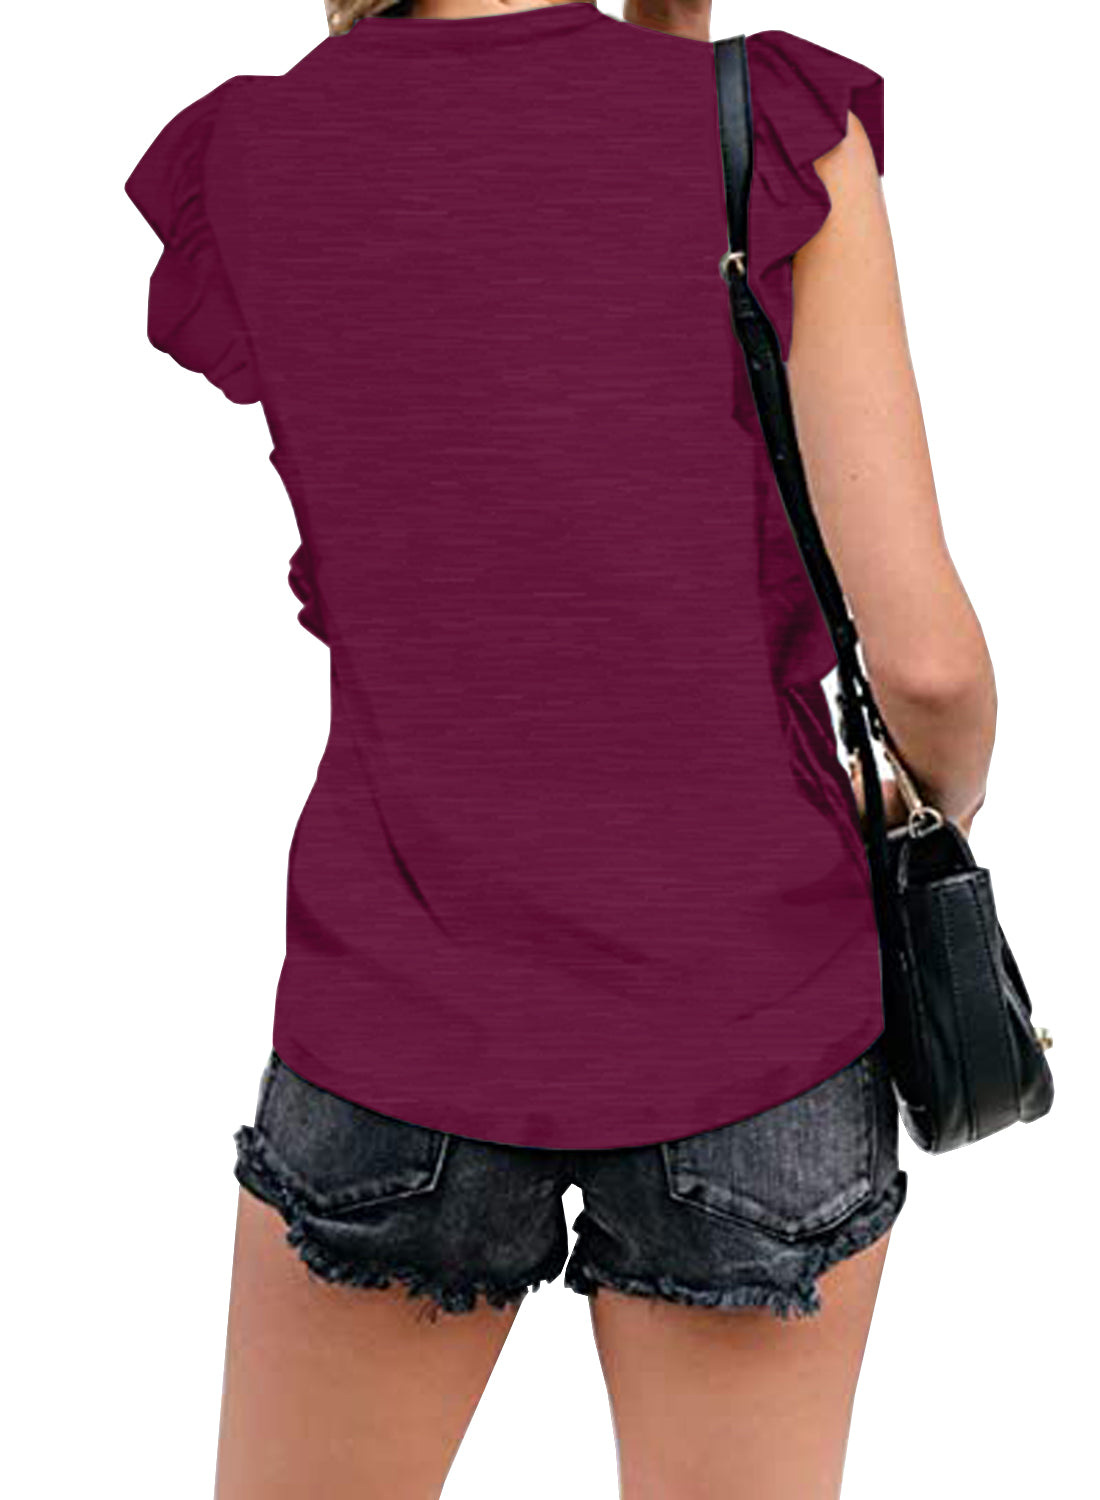 MIHOLL Women's Summer Sleeveless Tops Casual Loose Ruffle Shirts Tank Tops